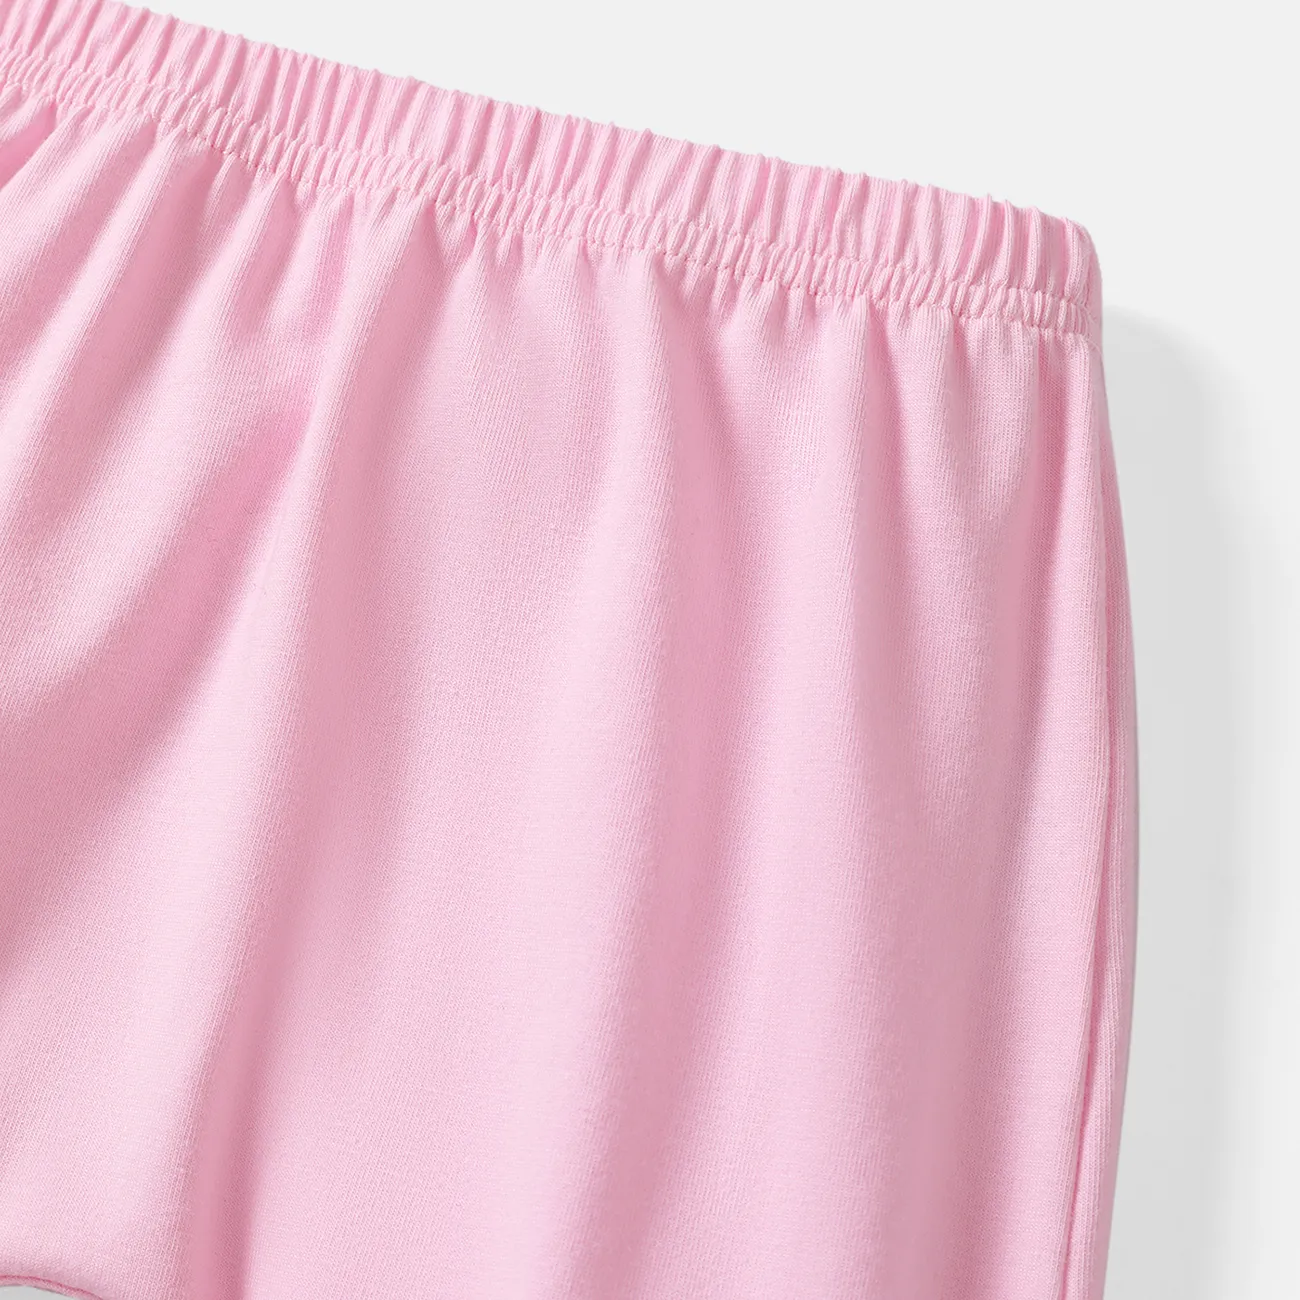 Looney Tunes Baby Boy/Girl Cartoon Animal Print Cotton Sweatpants Light Pink big image 1